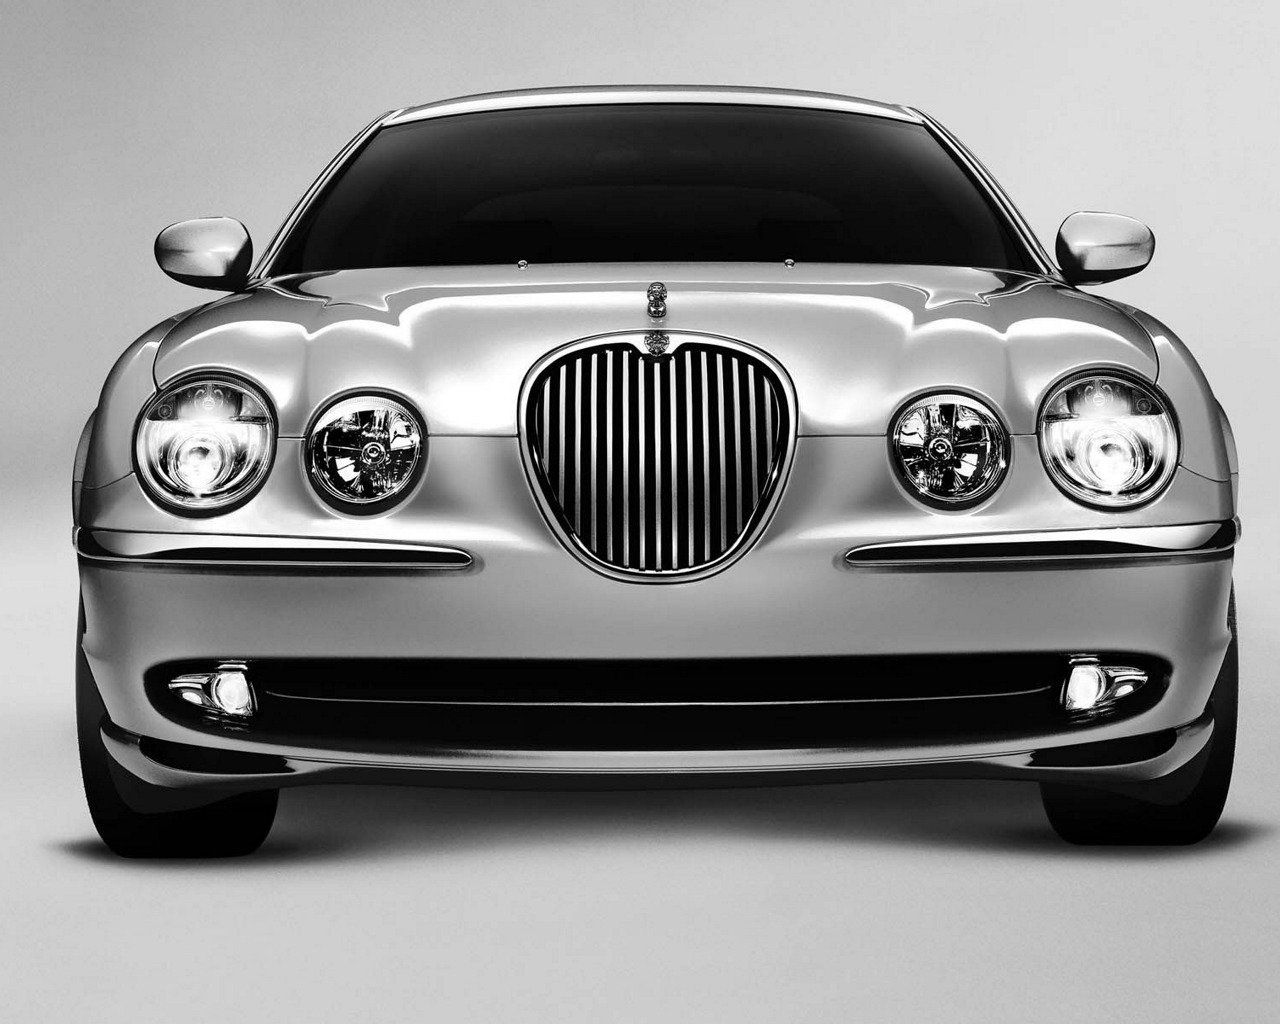 Awesome Jaguar car free wallpaper ID:398026 for hd 1280x1024 desktop